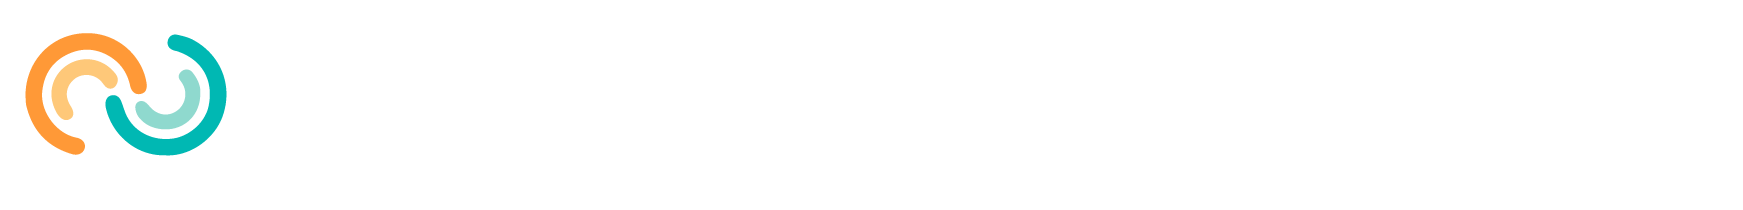 ContinuumCloud Logo White